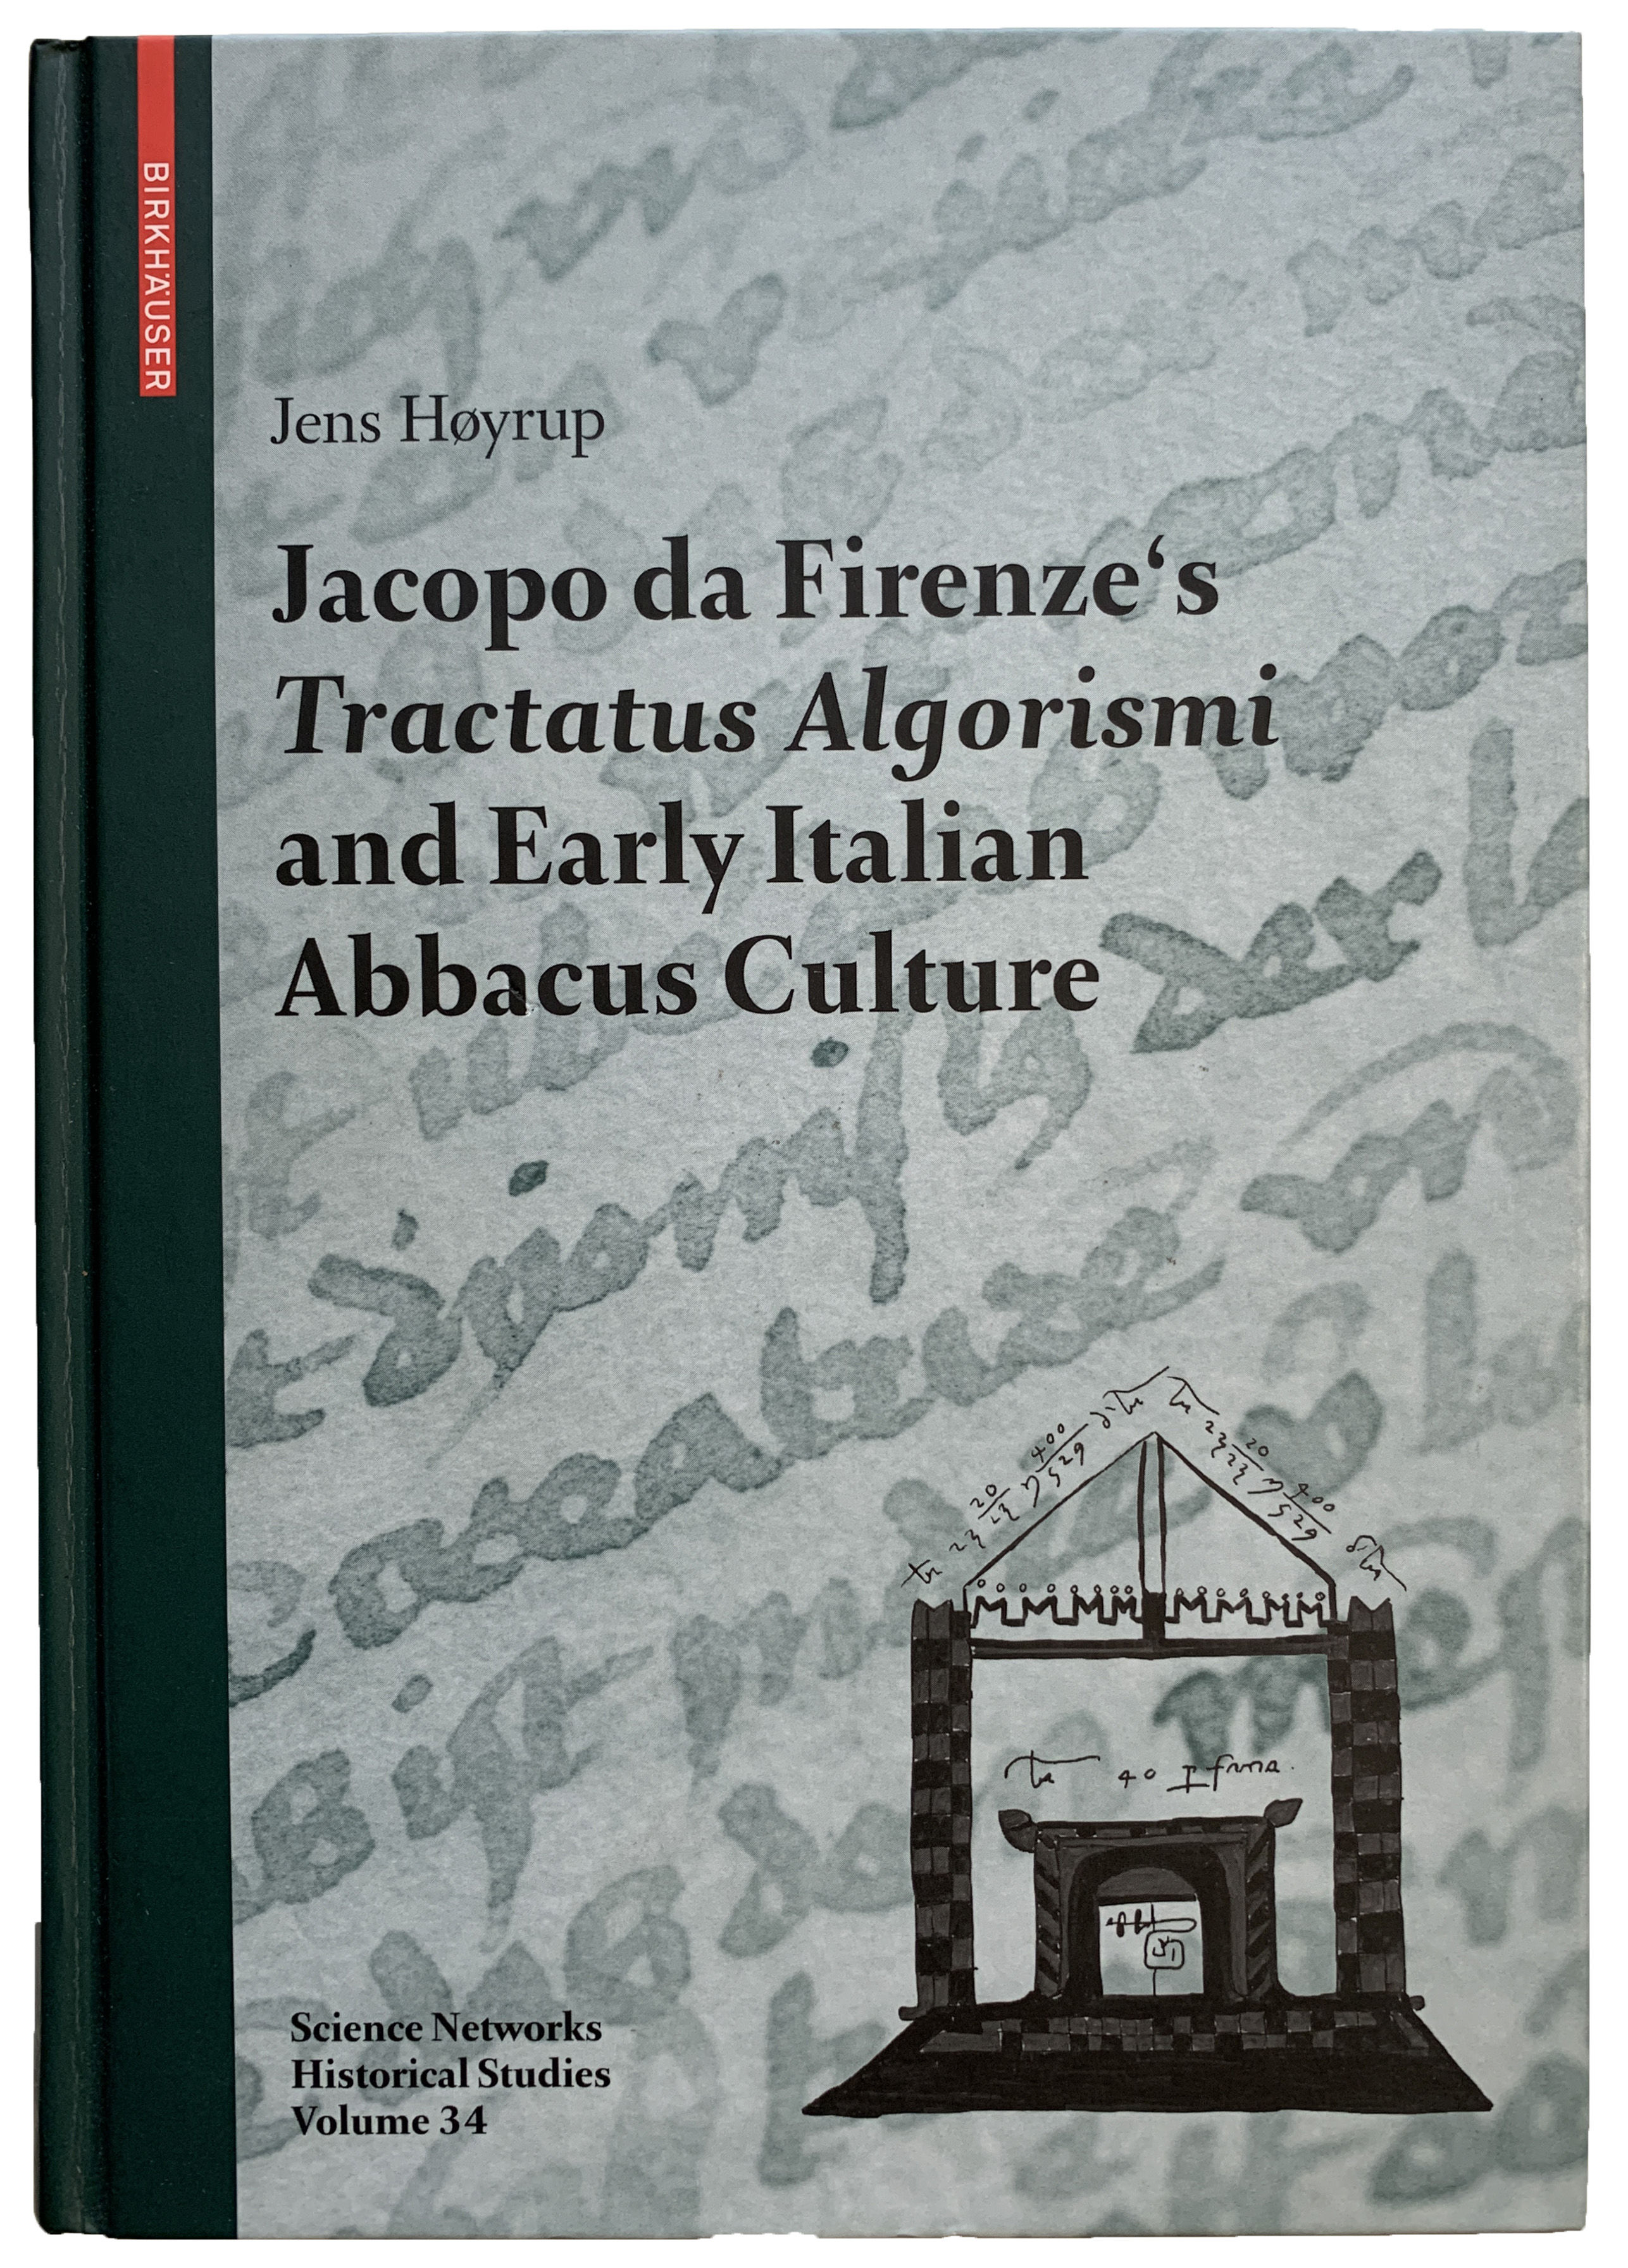 Jacopo da Firenze's Tractatus Algorismi and Early Italian Abbacus Culture. - HOYRUP, Jens (1943-).